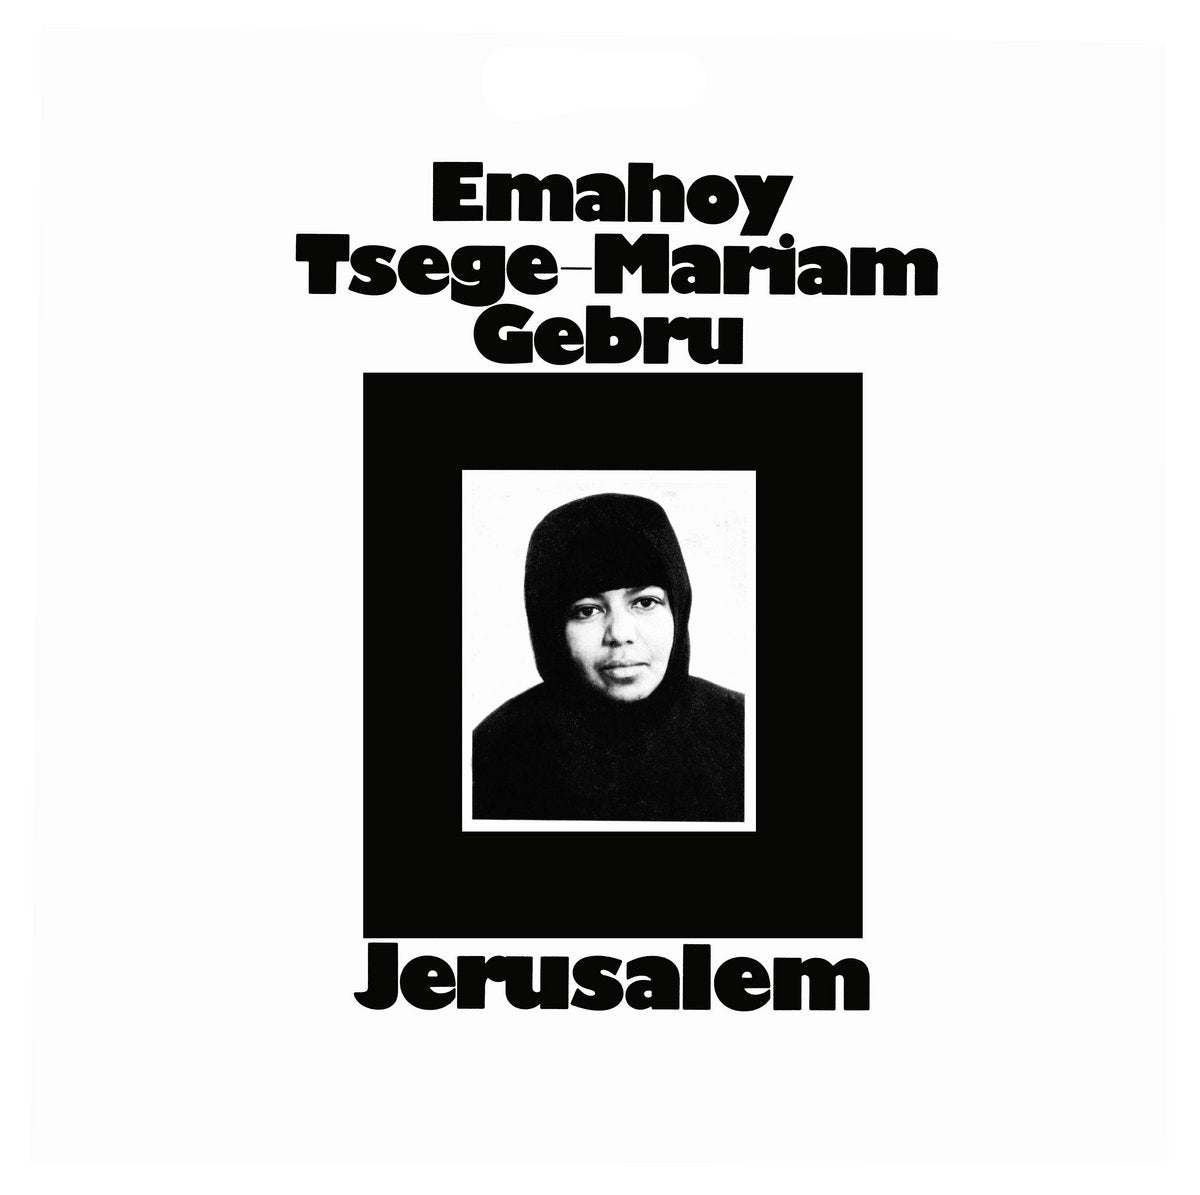 EMAHOY TSEGE MARIAM GEBRU 'JERUSALEM'